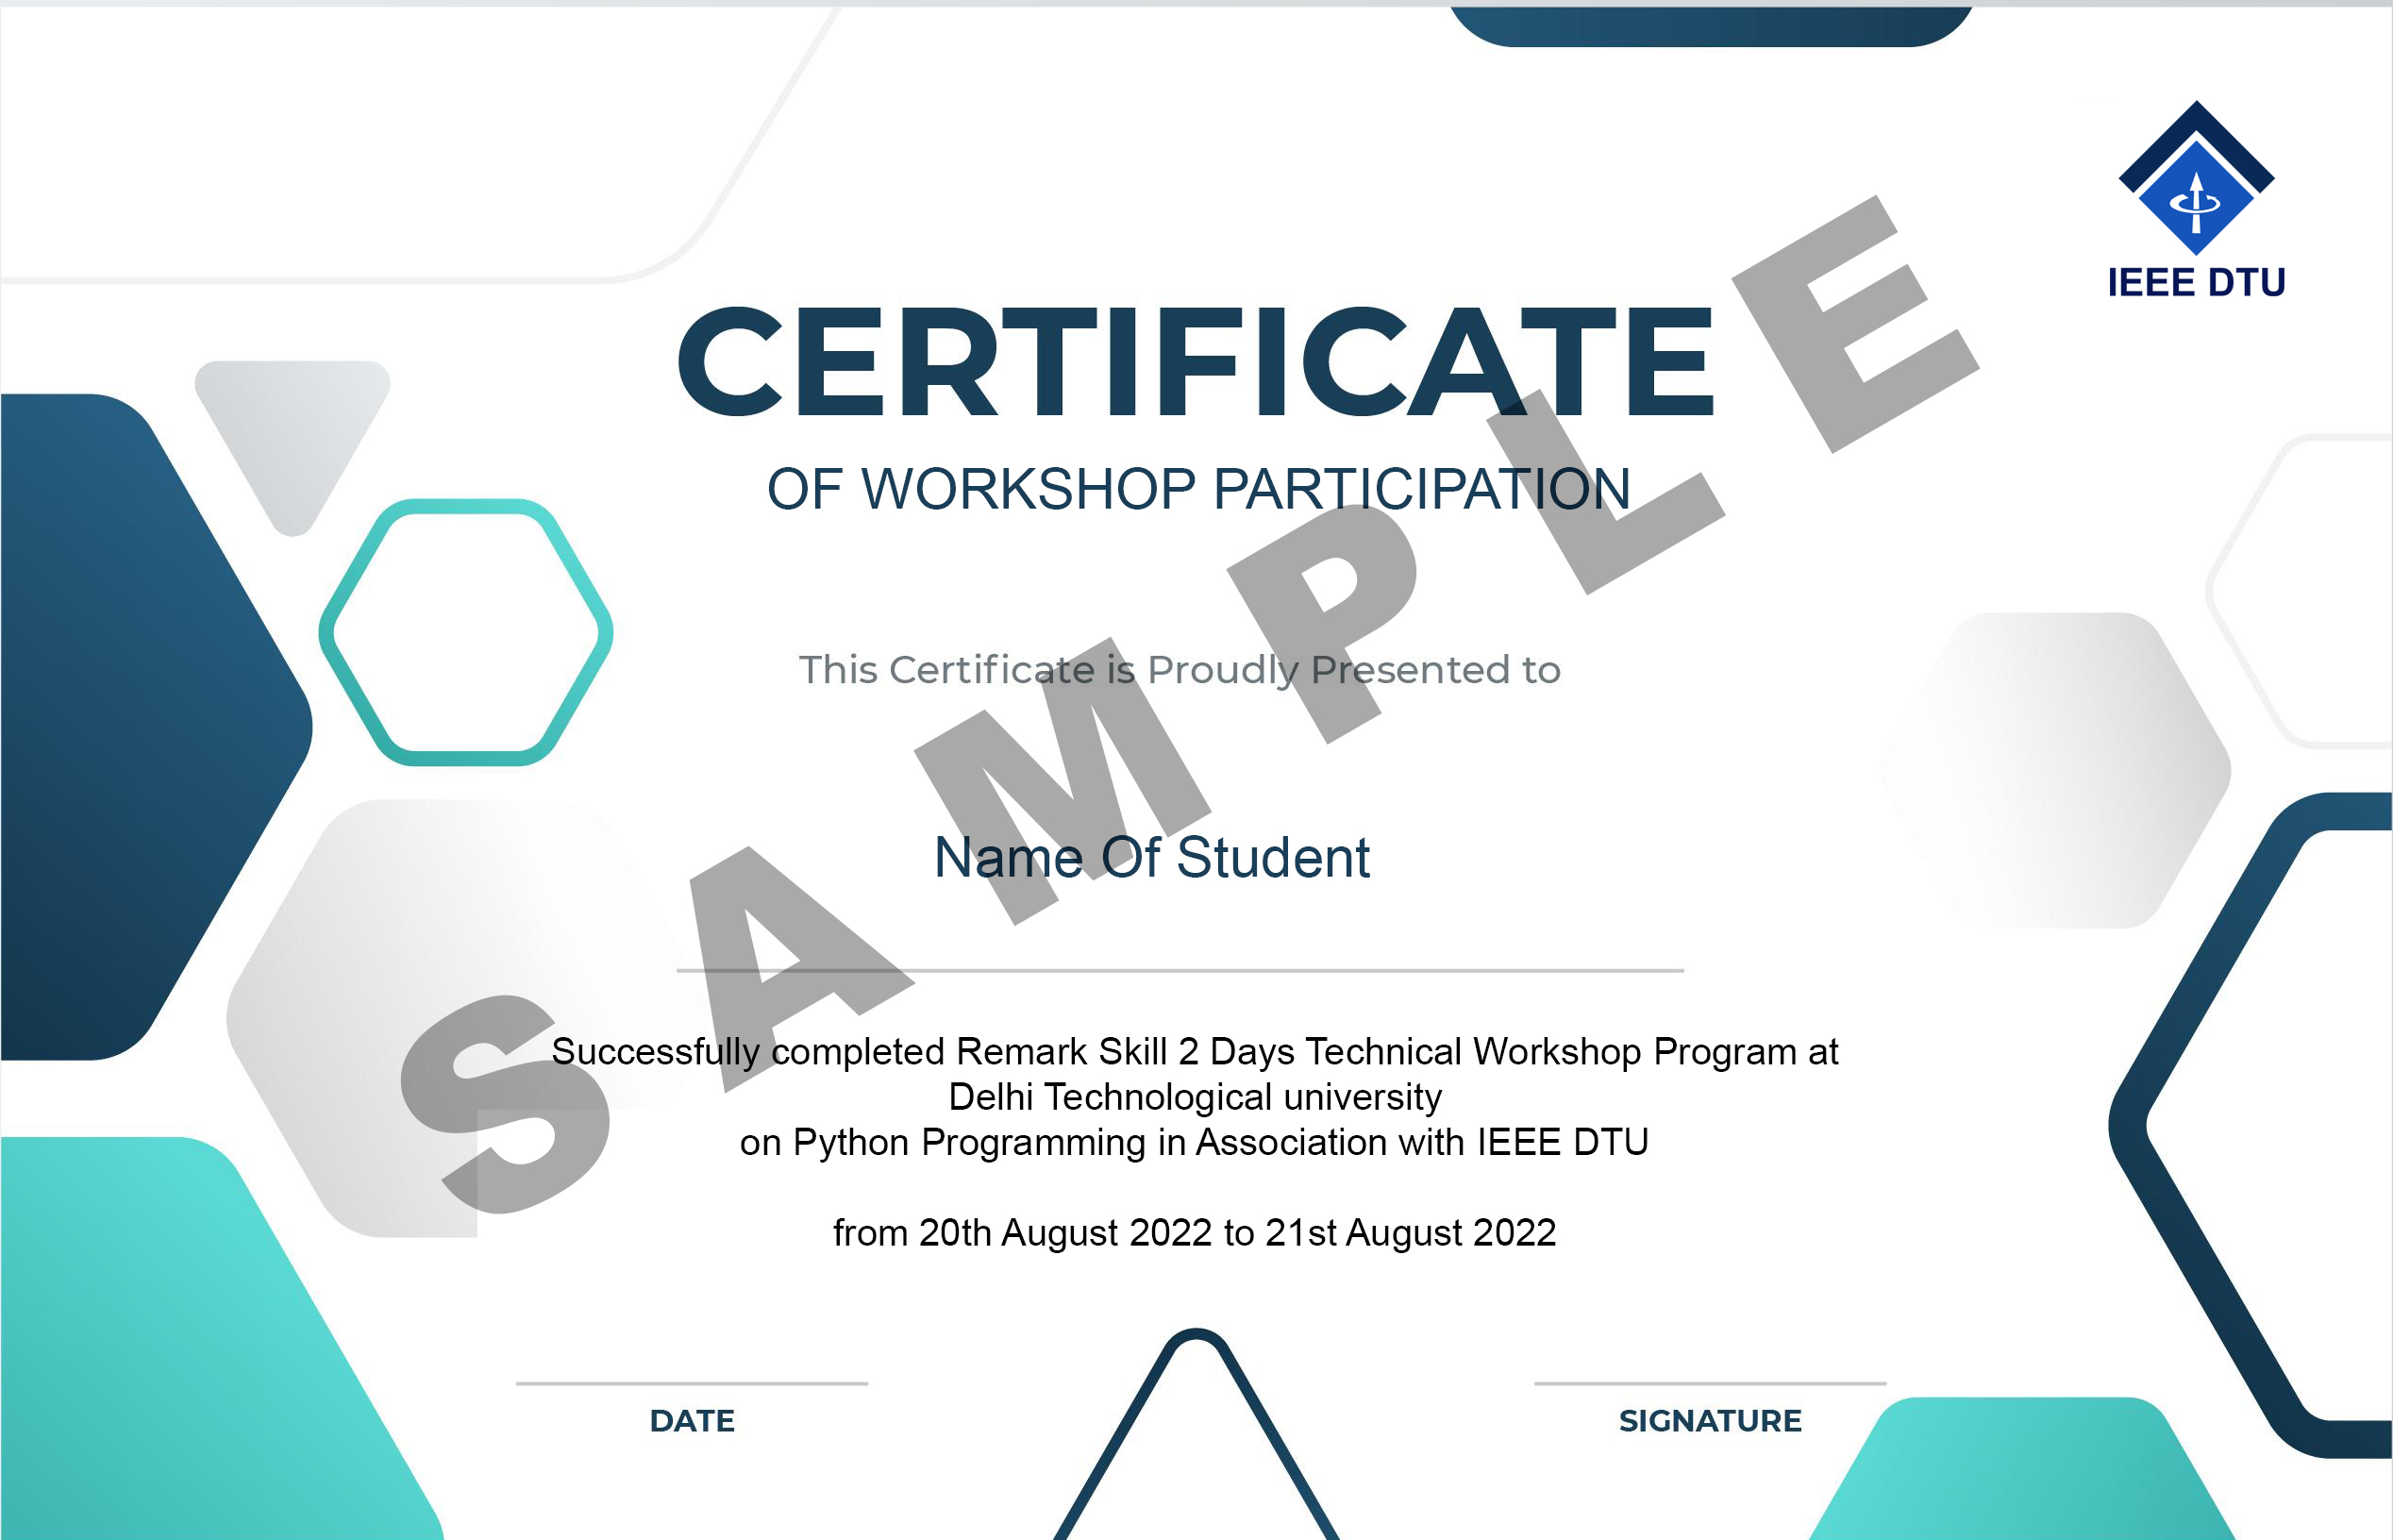 IEEE DTU Workshop Participation Certificate